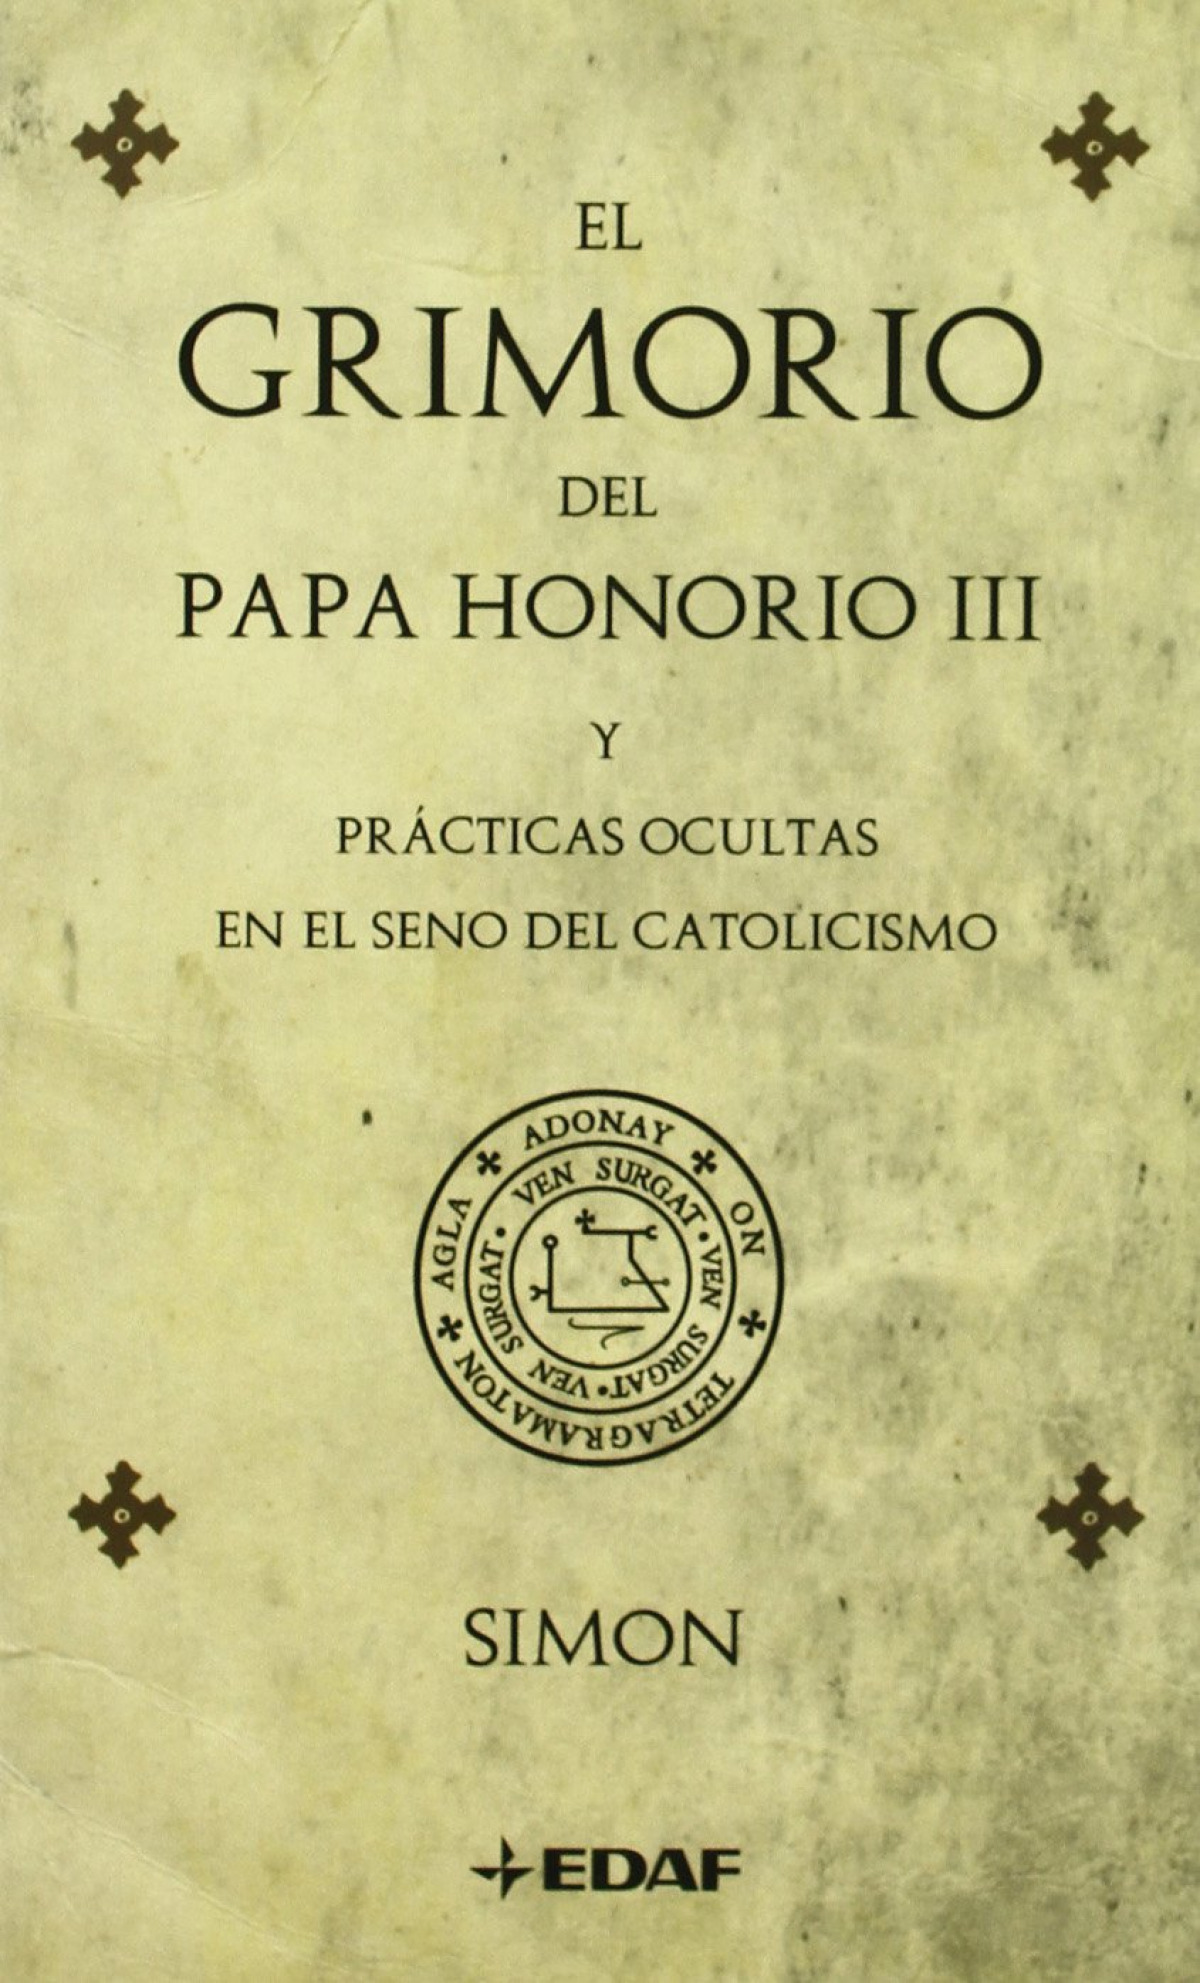 Grimorio del papa honorio iii, el - Simon